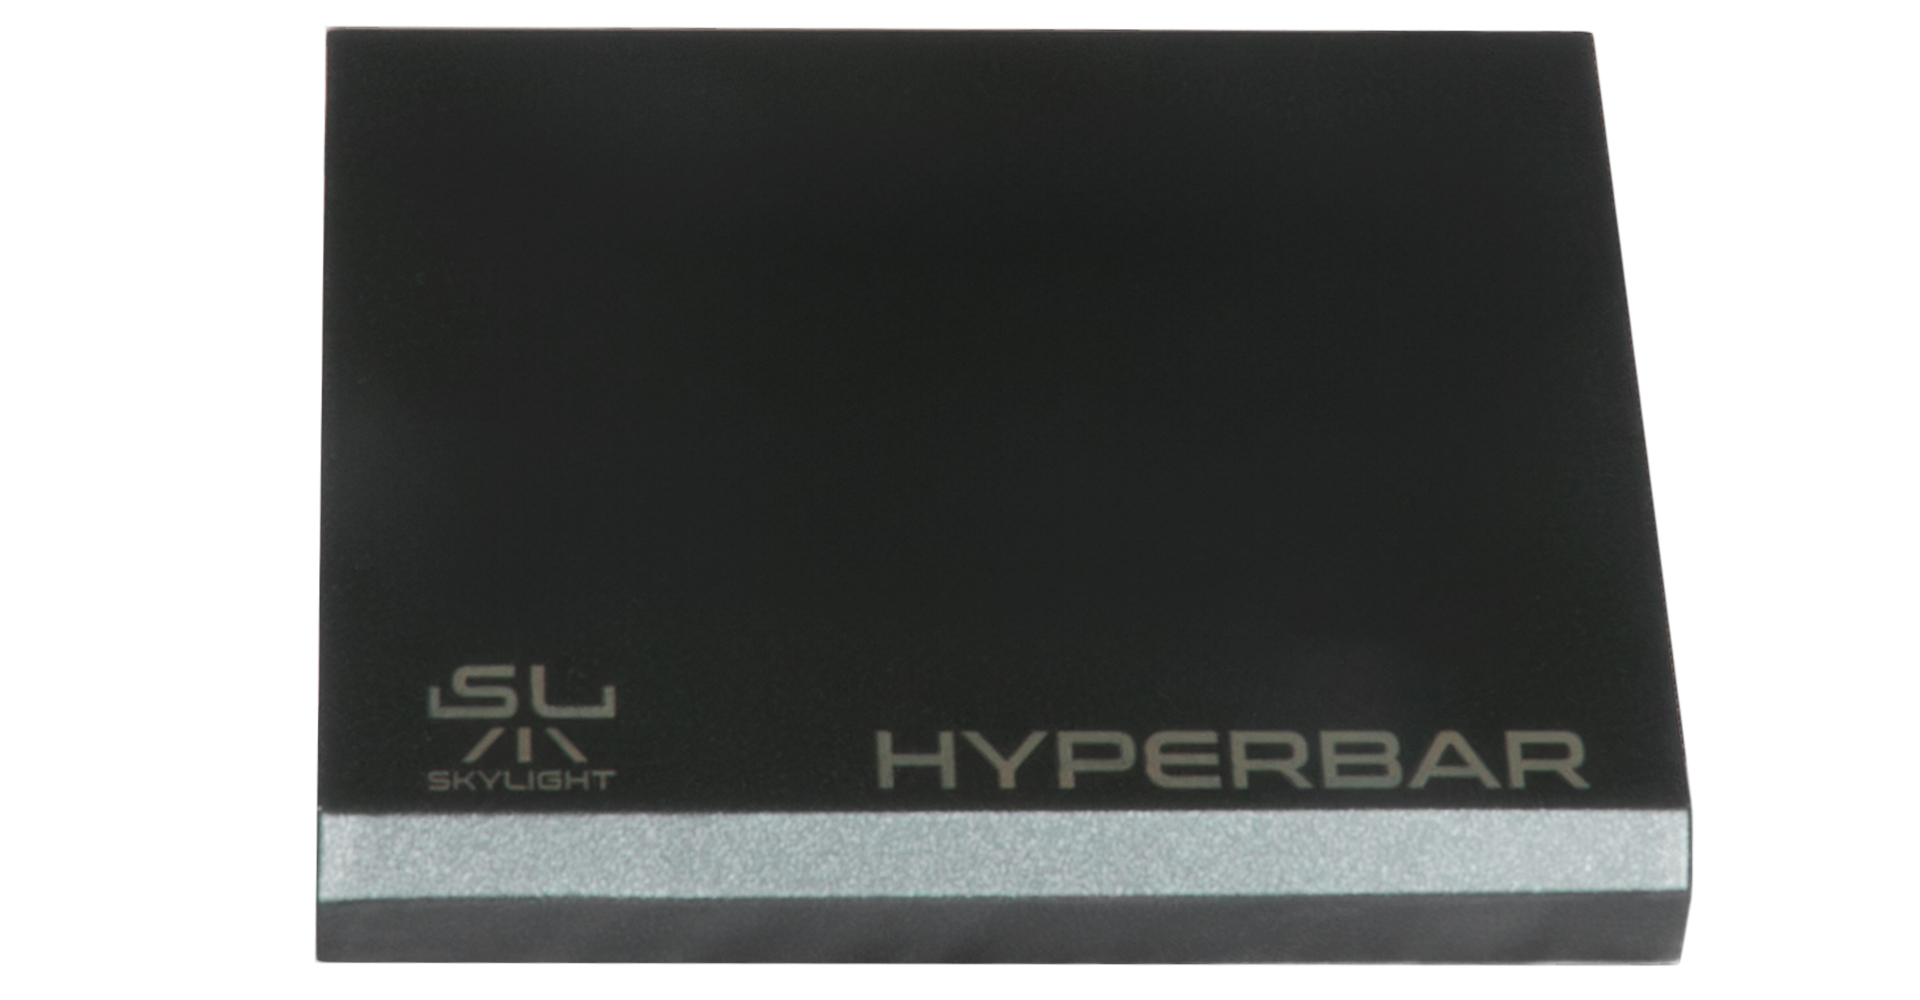 Skylight – Hyperbar